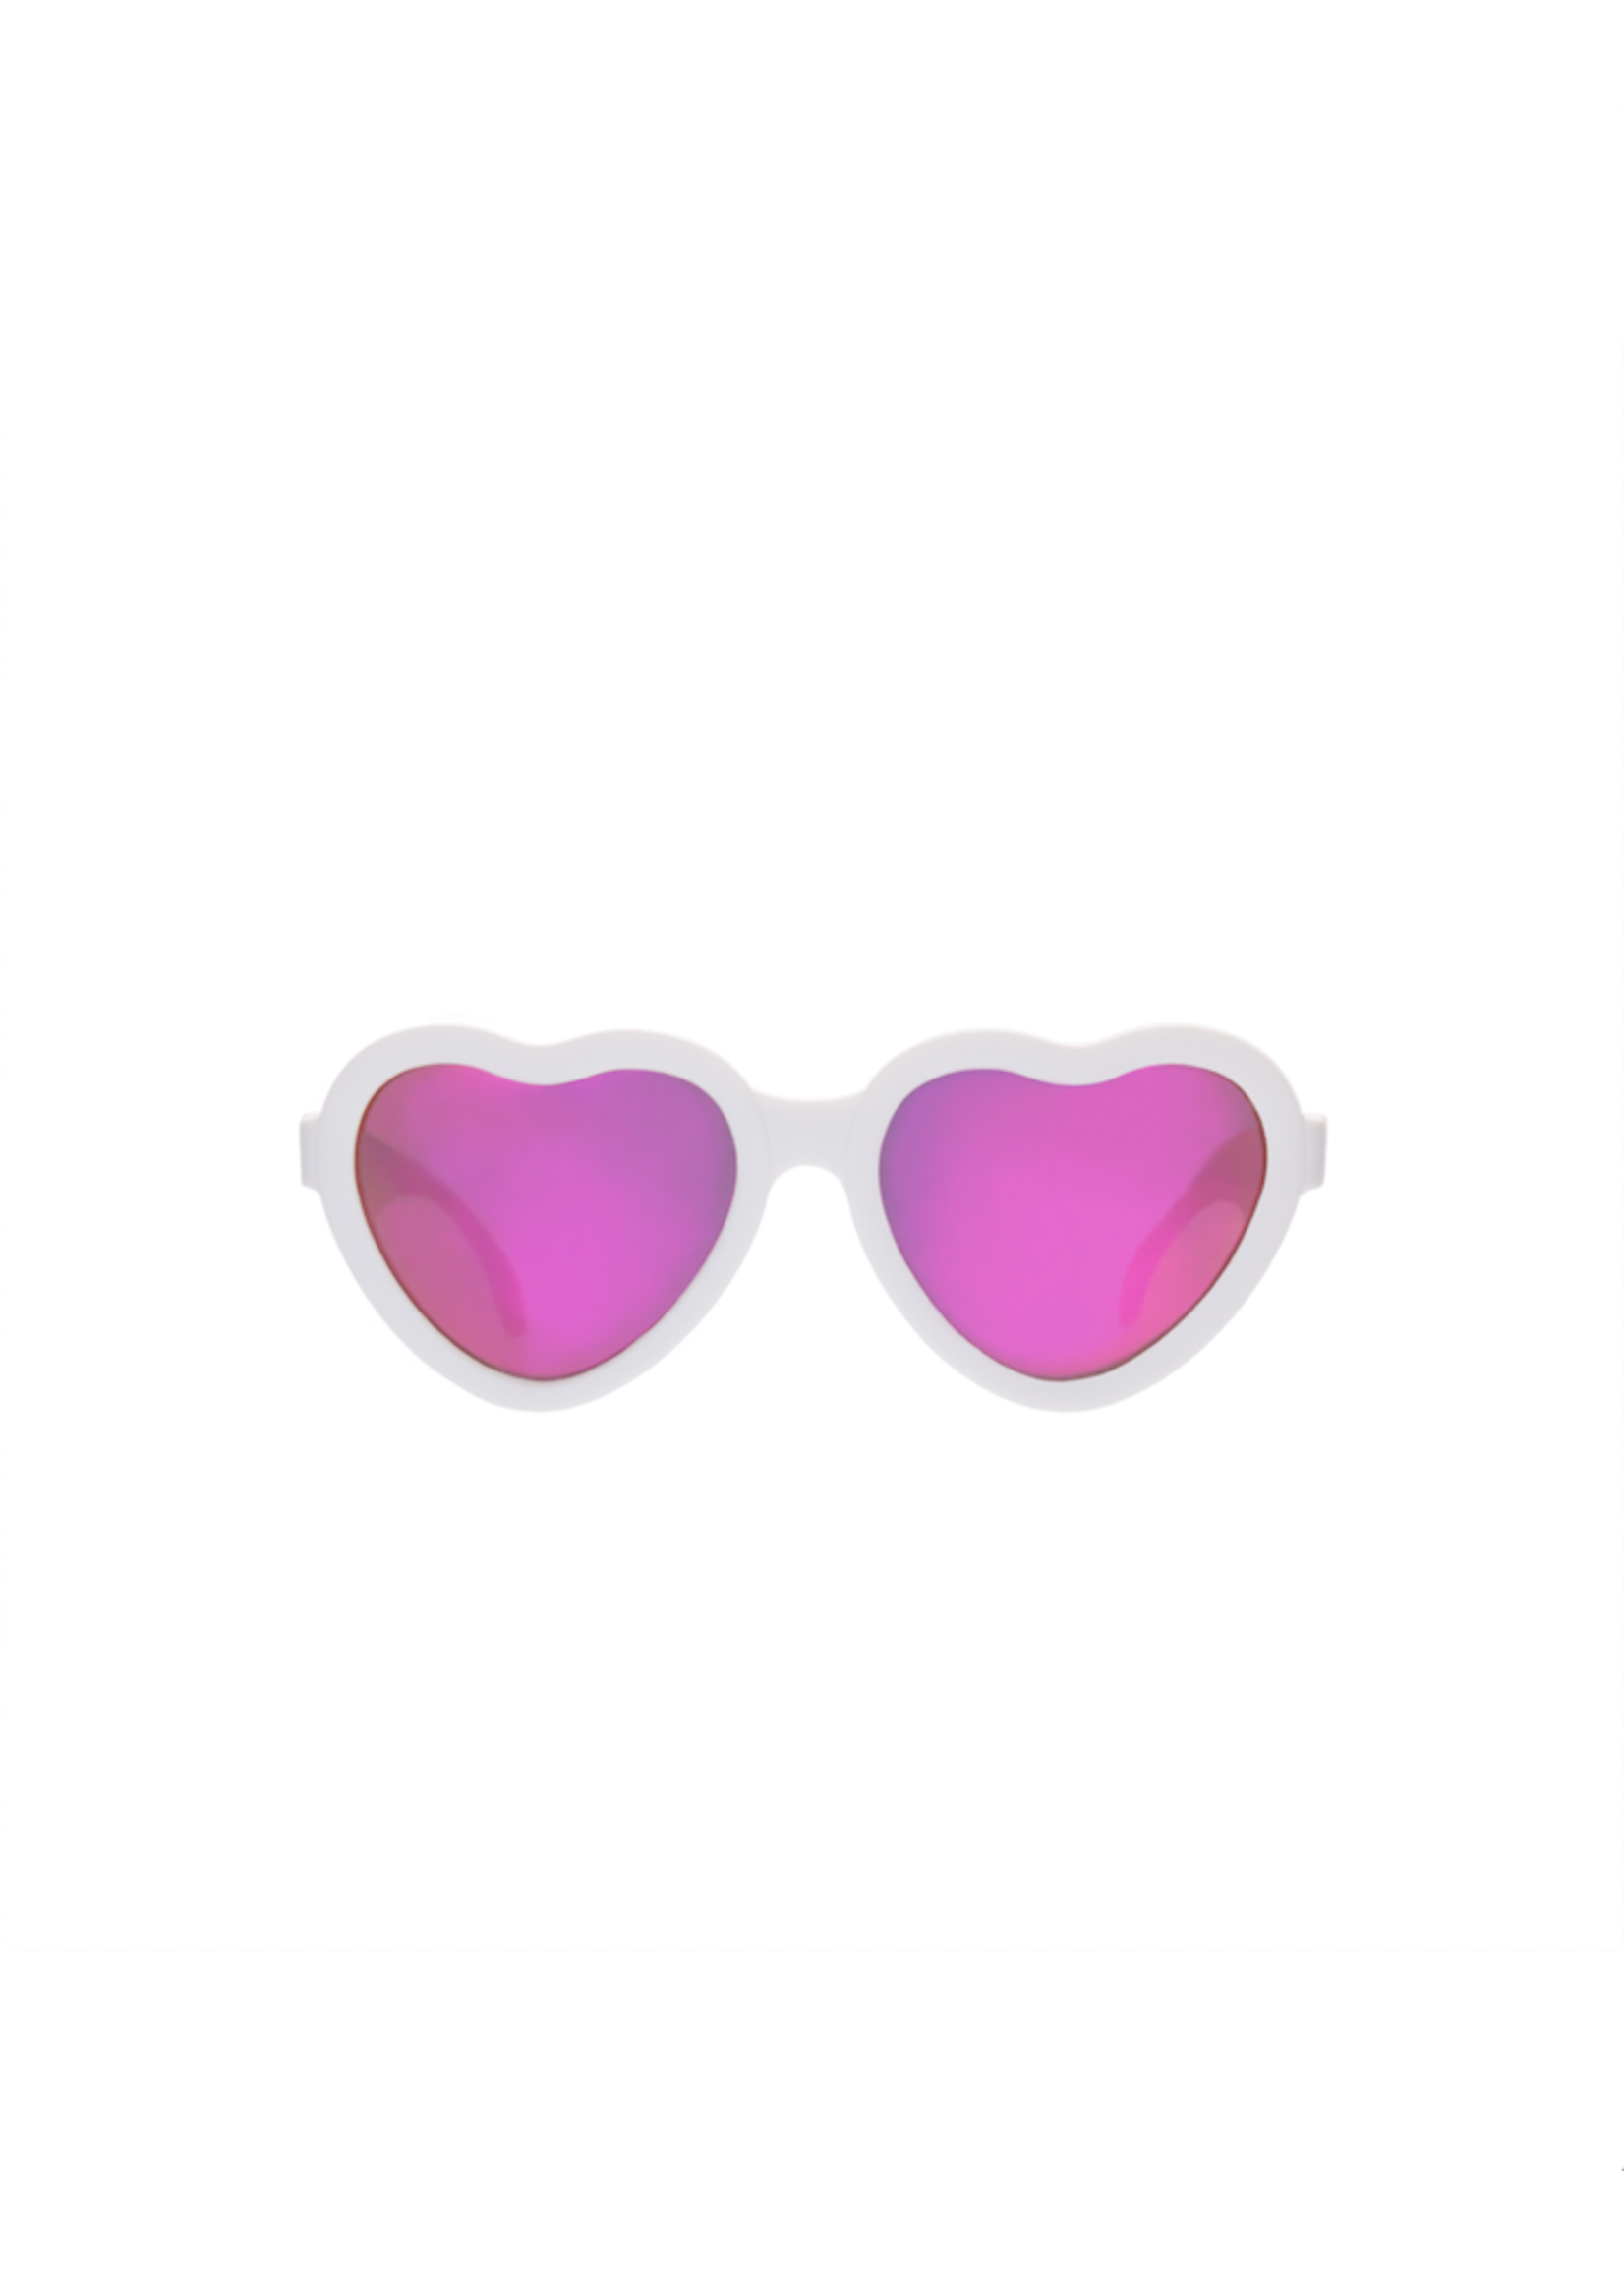 Babiators Babiators, Limited Edition, SweetHeart Sunglasses